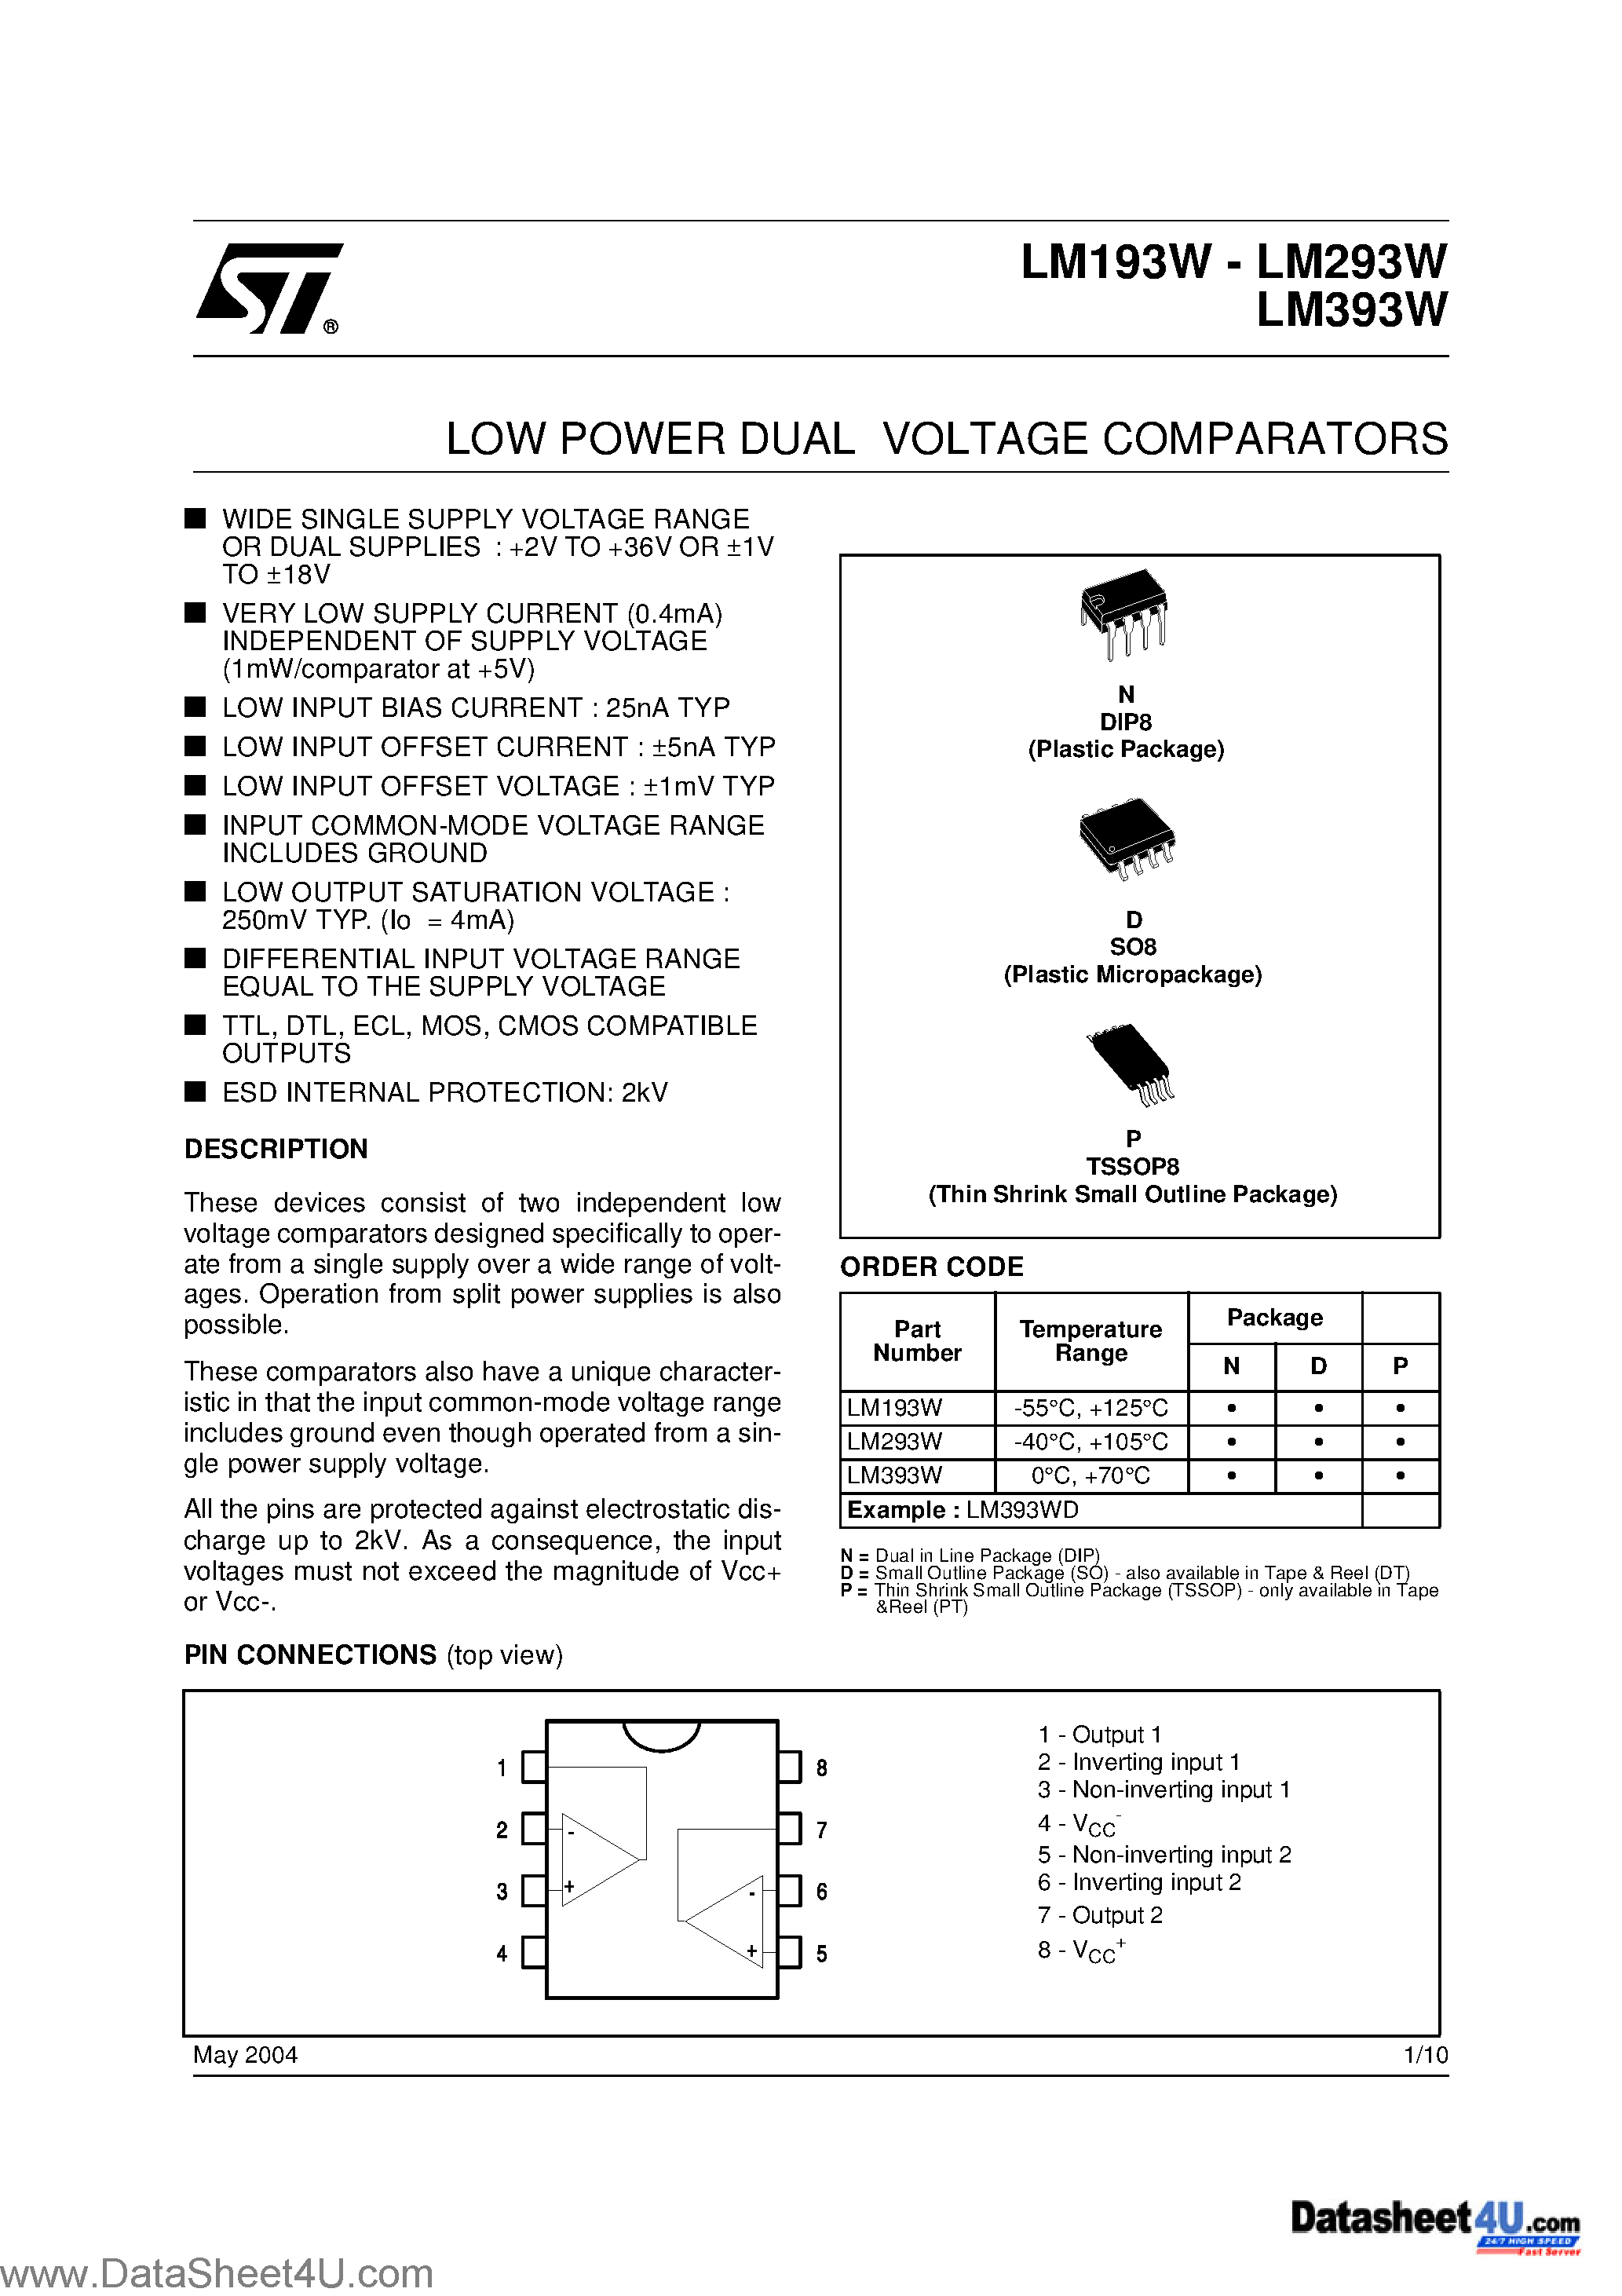 Datasheet LM193W - LOW POWER DUAL VOLTAGE COMPARATORS page 1